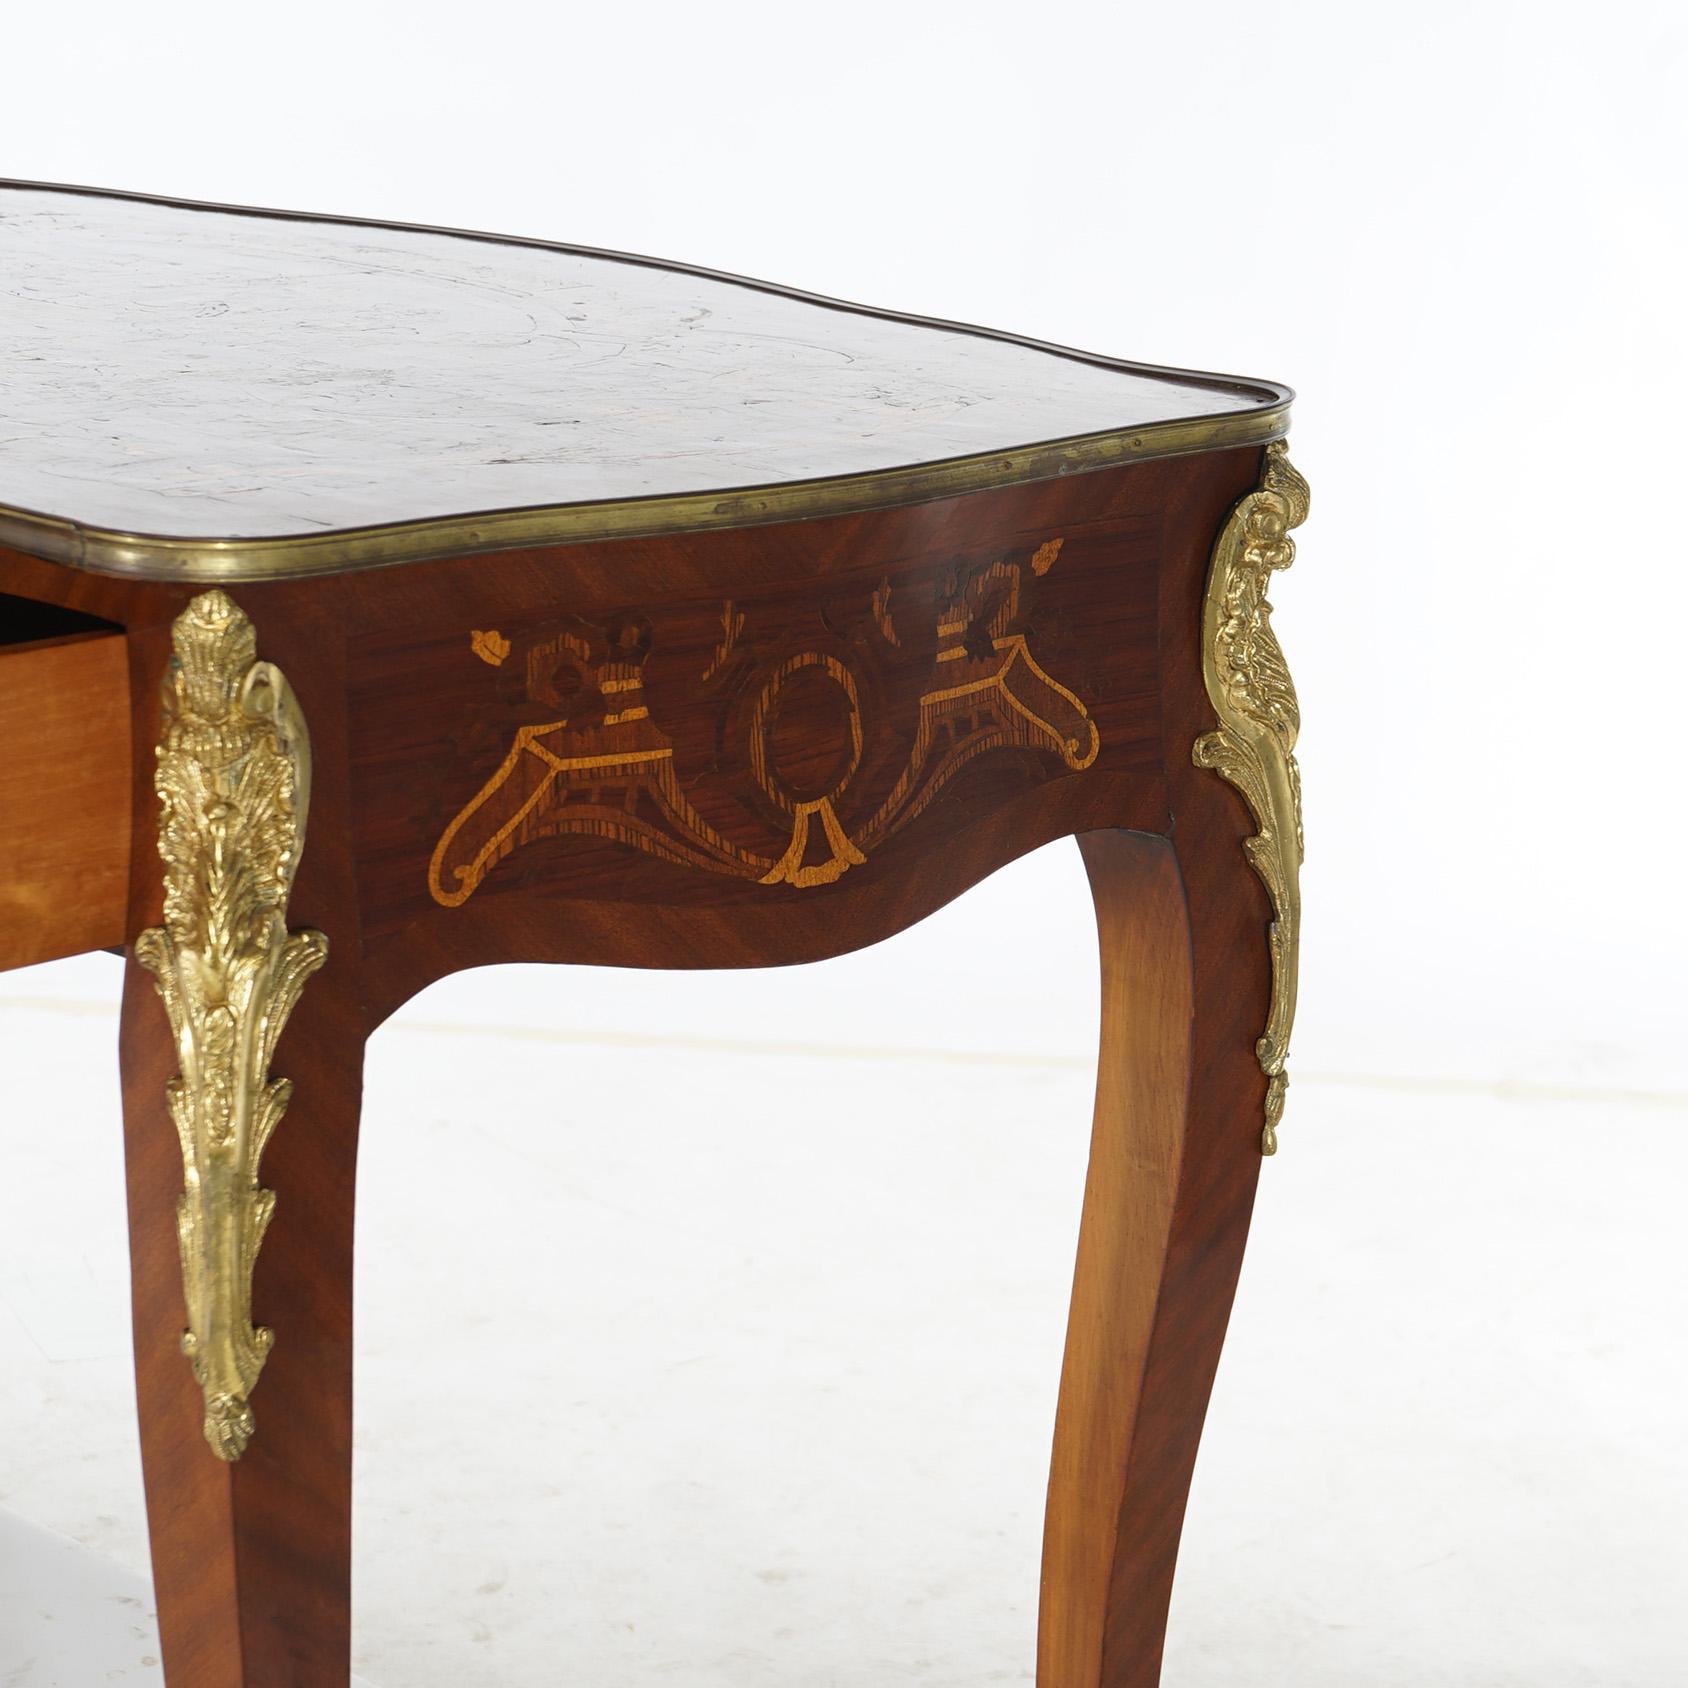 French Louis XIV Kingwood, Mahogany, Ormolu & Satinwood Bureau Plat Desk 20th C For Sale 4